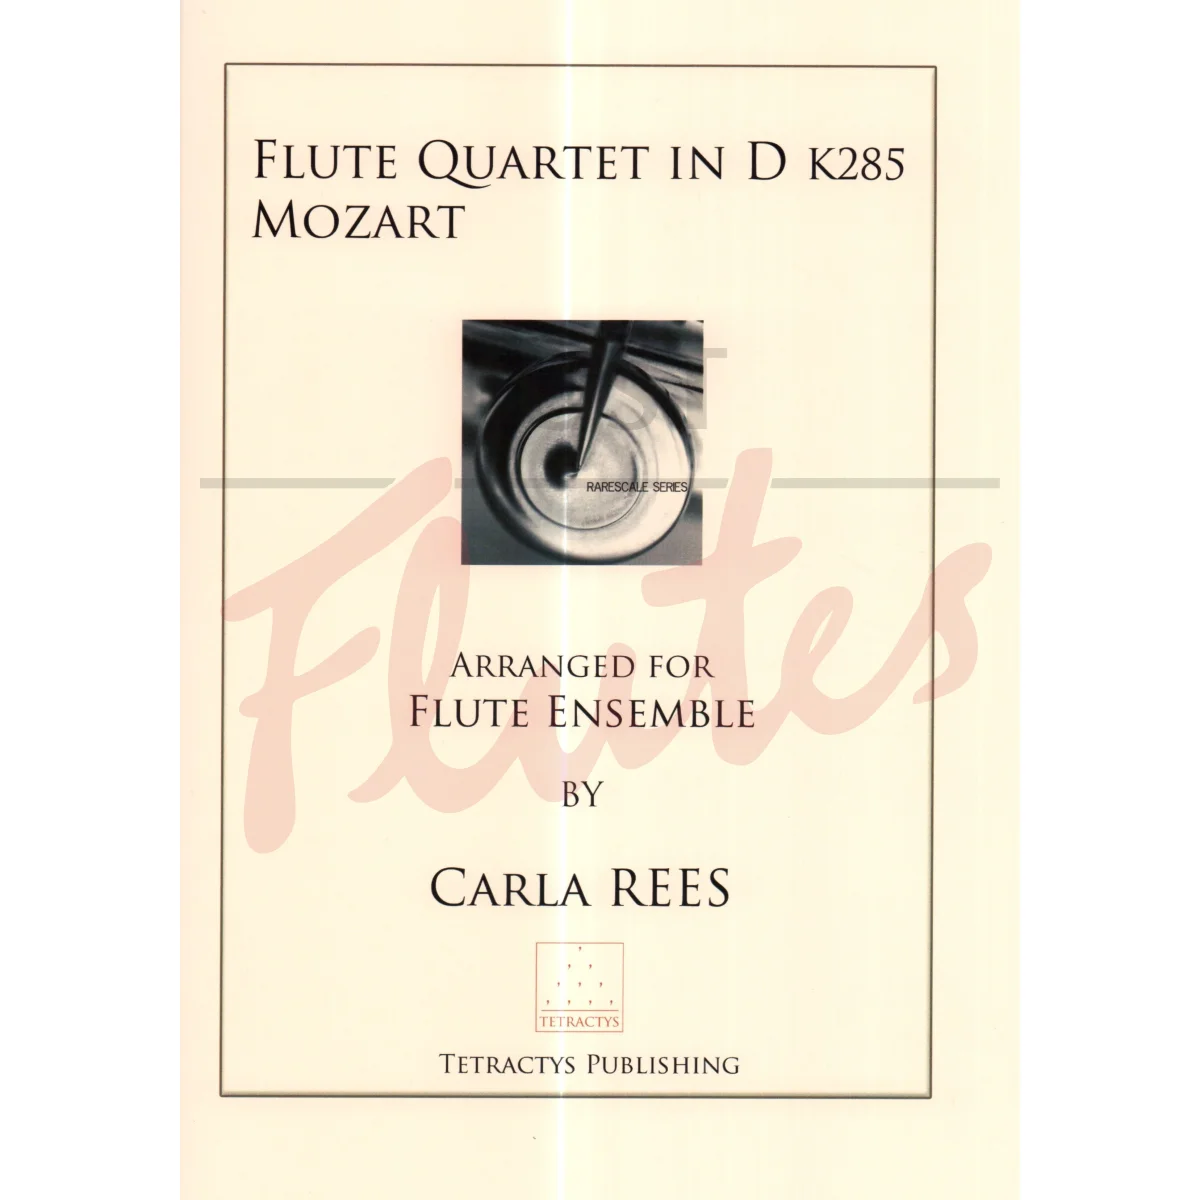 Flute Quartet in D major